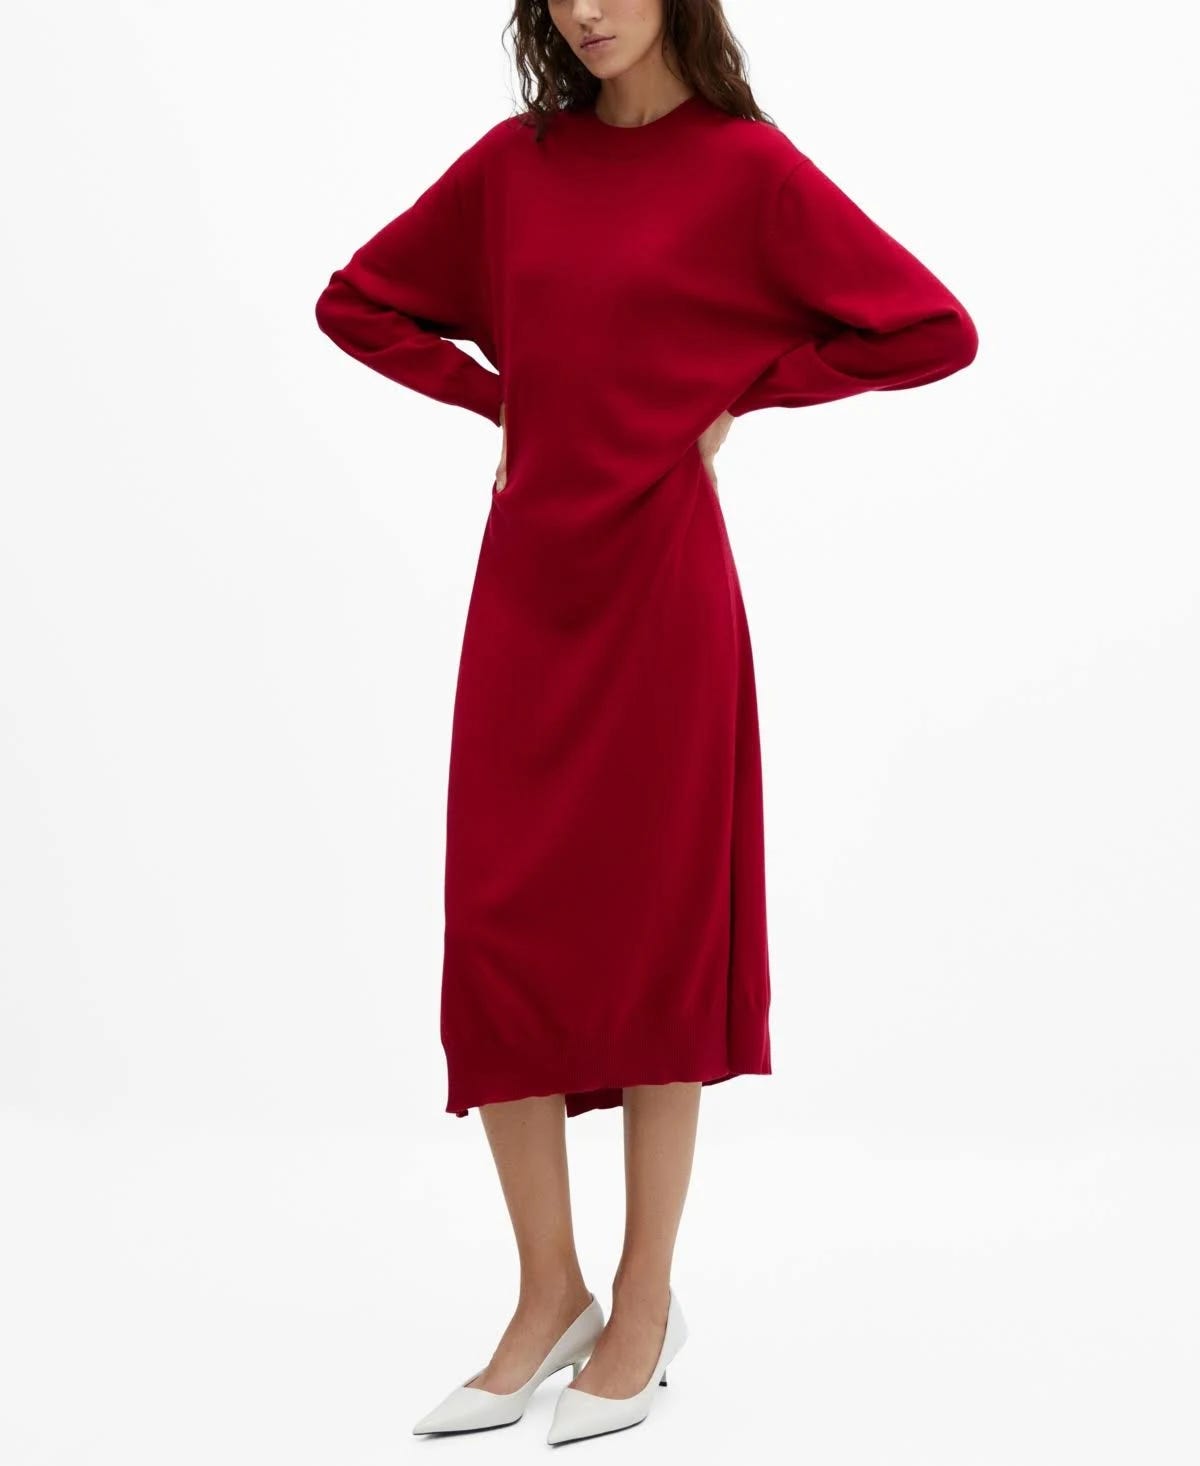 Red Long Sleeve Midi Dress by Mango | Image